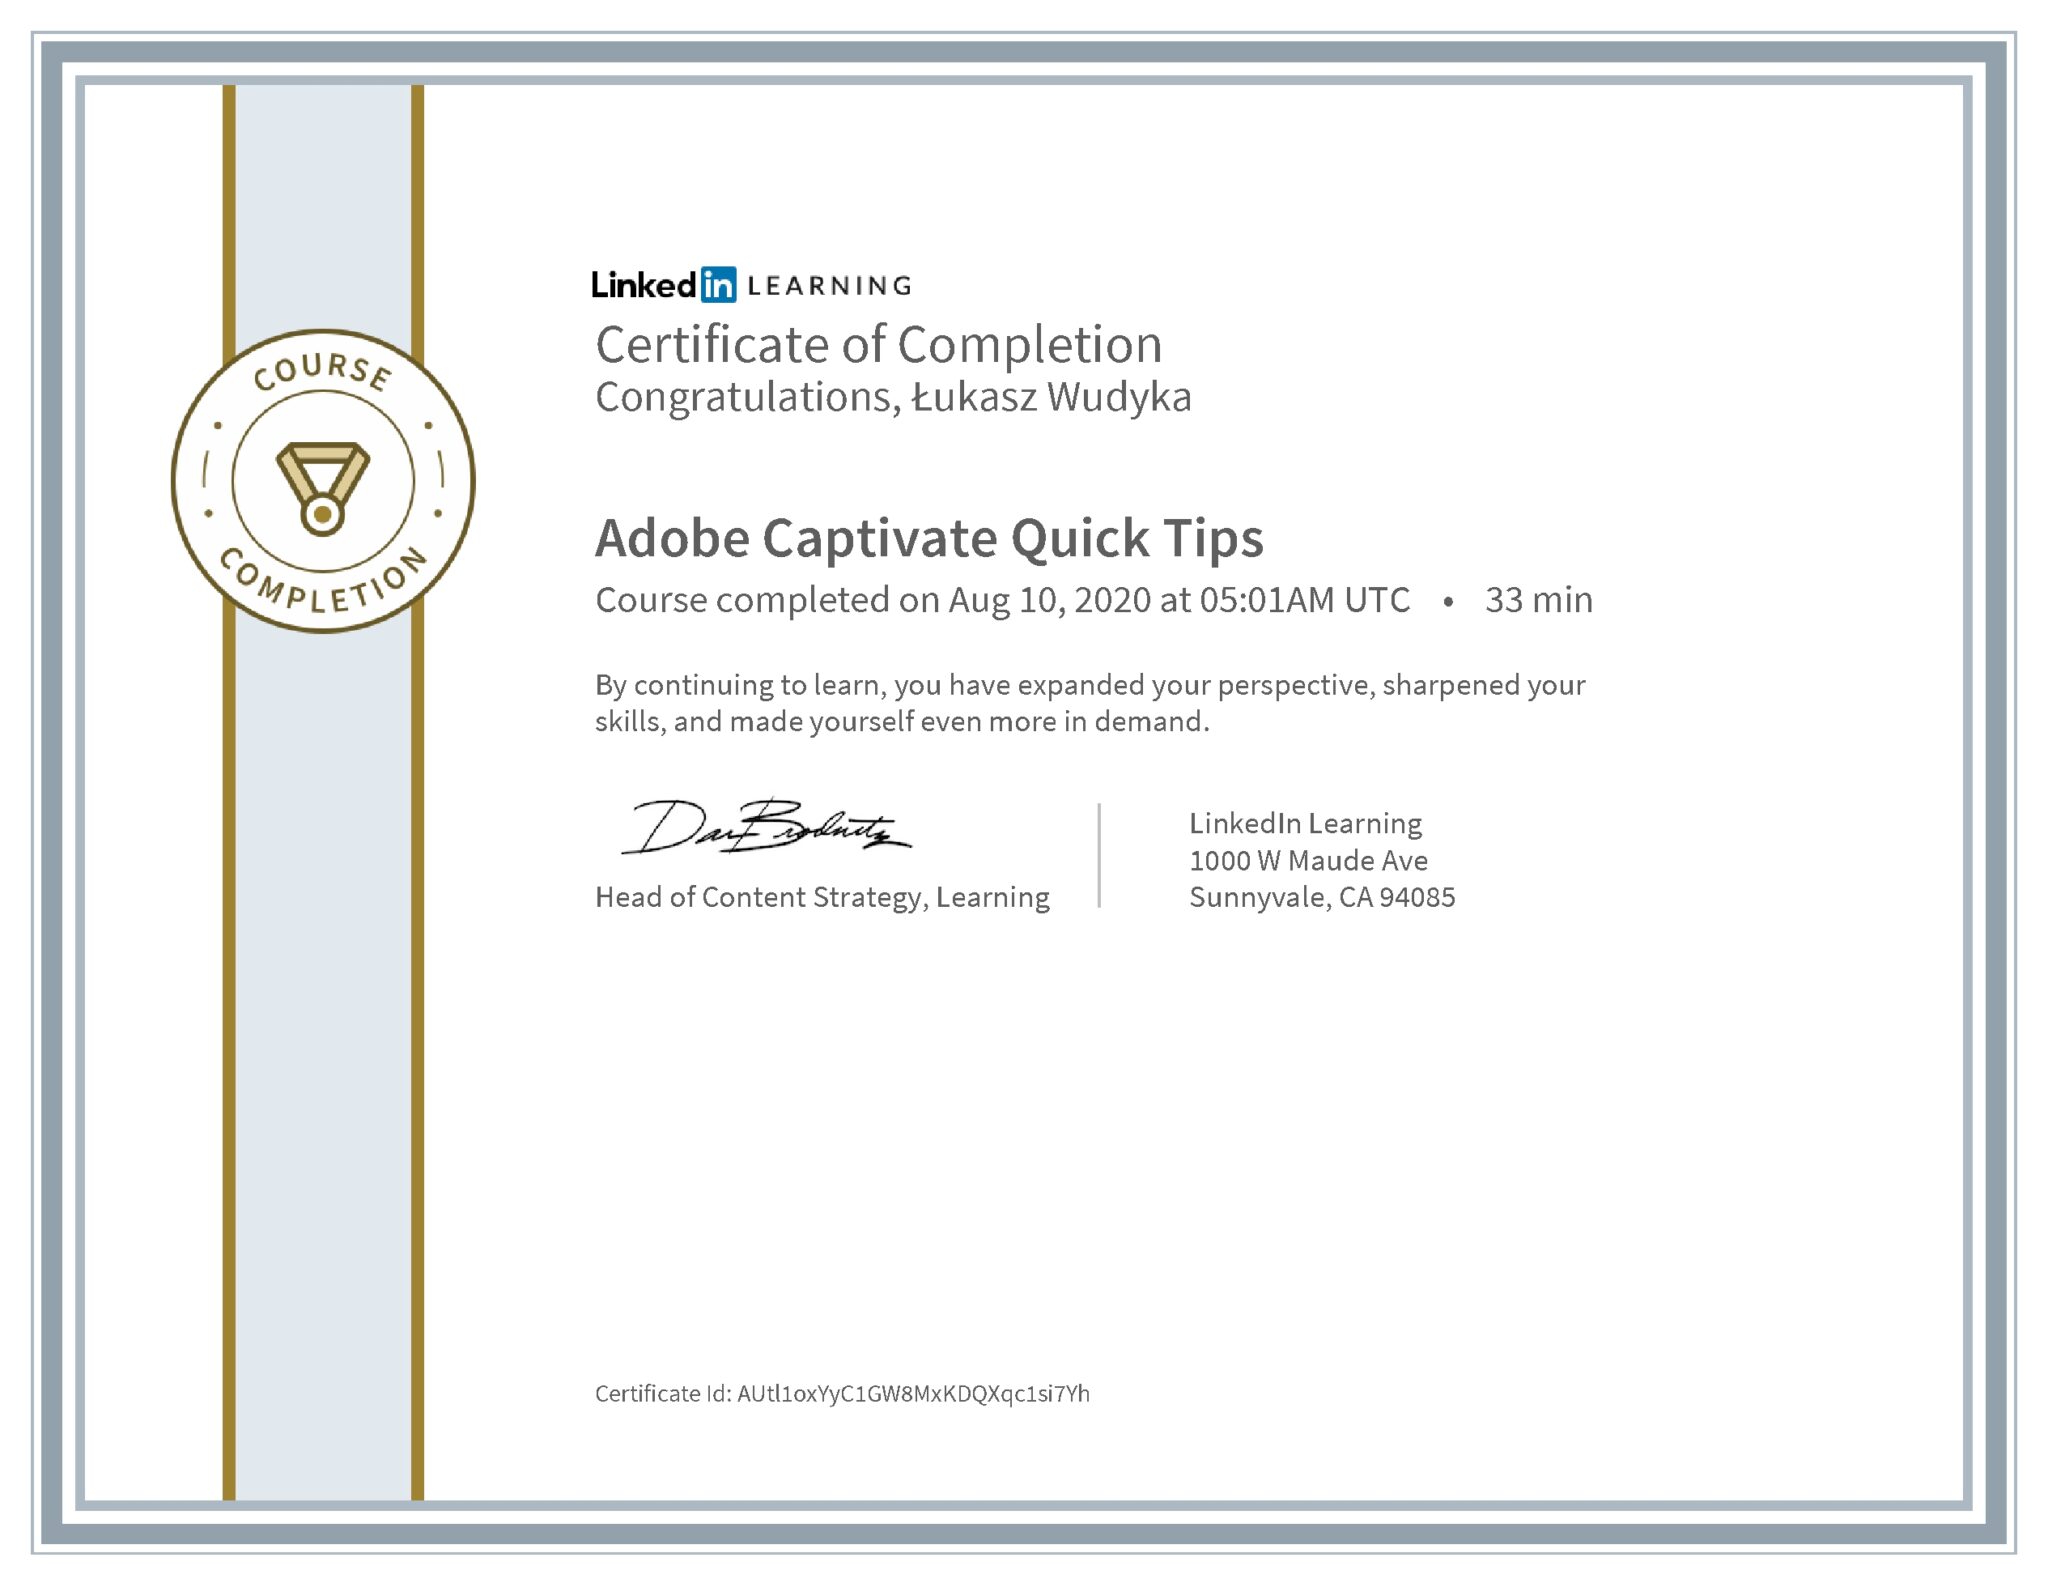 Łukasz Wudyka certyfikat LinkedIn Adobe Captivate Quick Tips